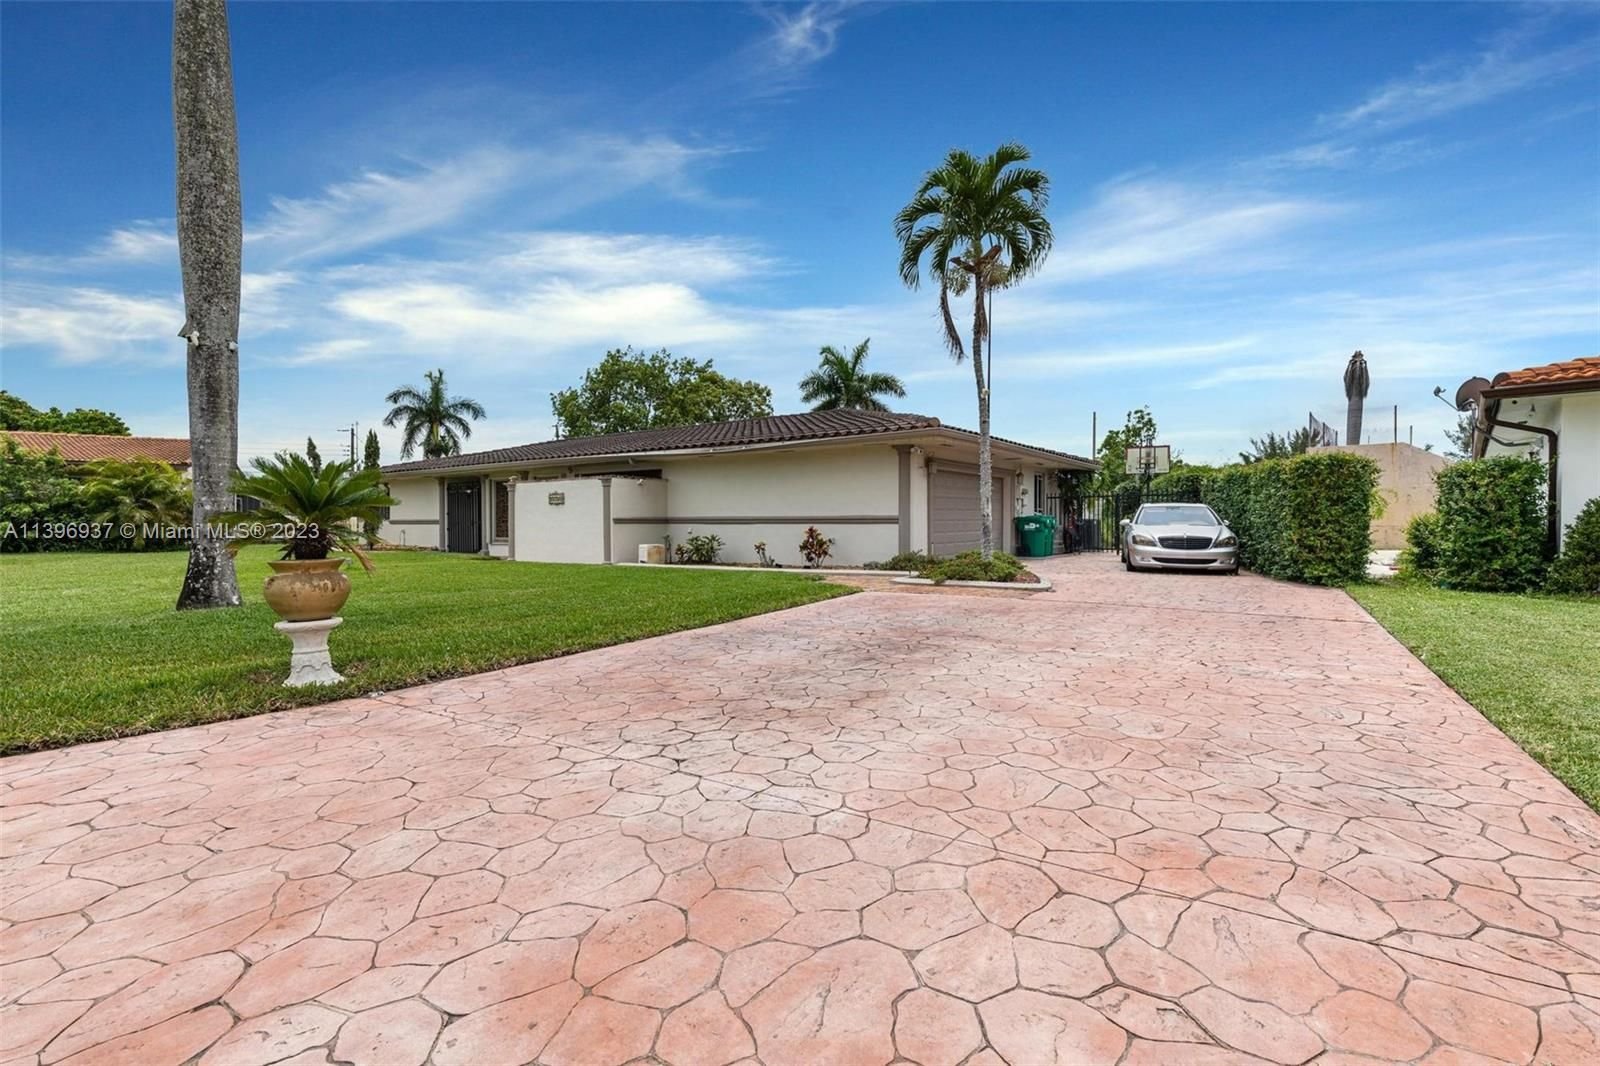 Real estate property located at 20300 15th Ave, Miami-Dade County, Miami Gardens, FL